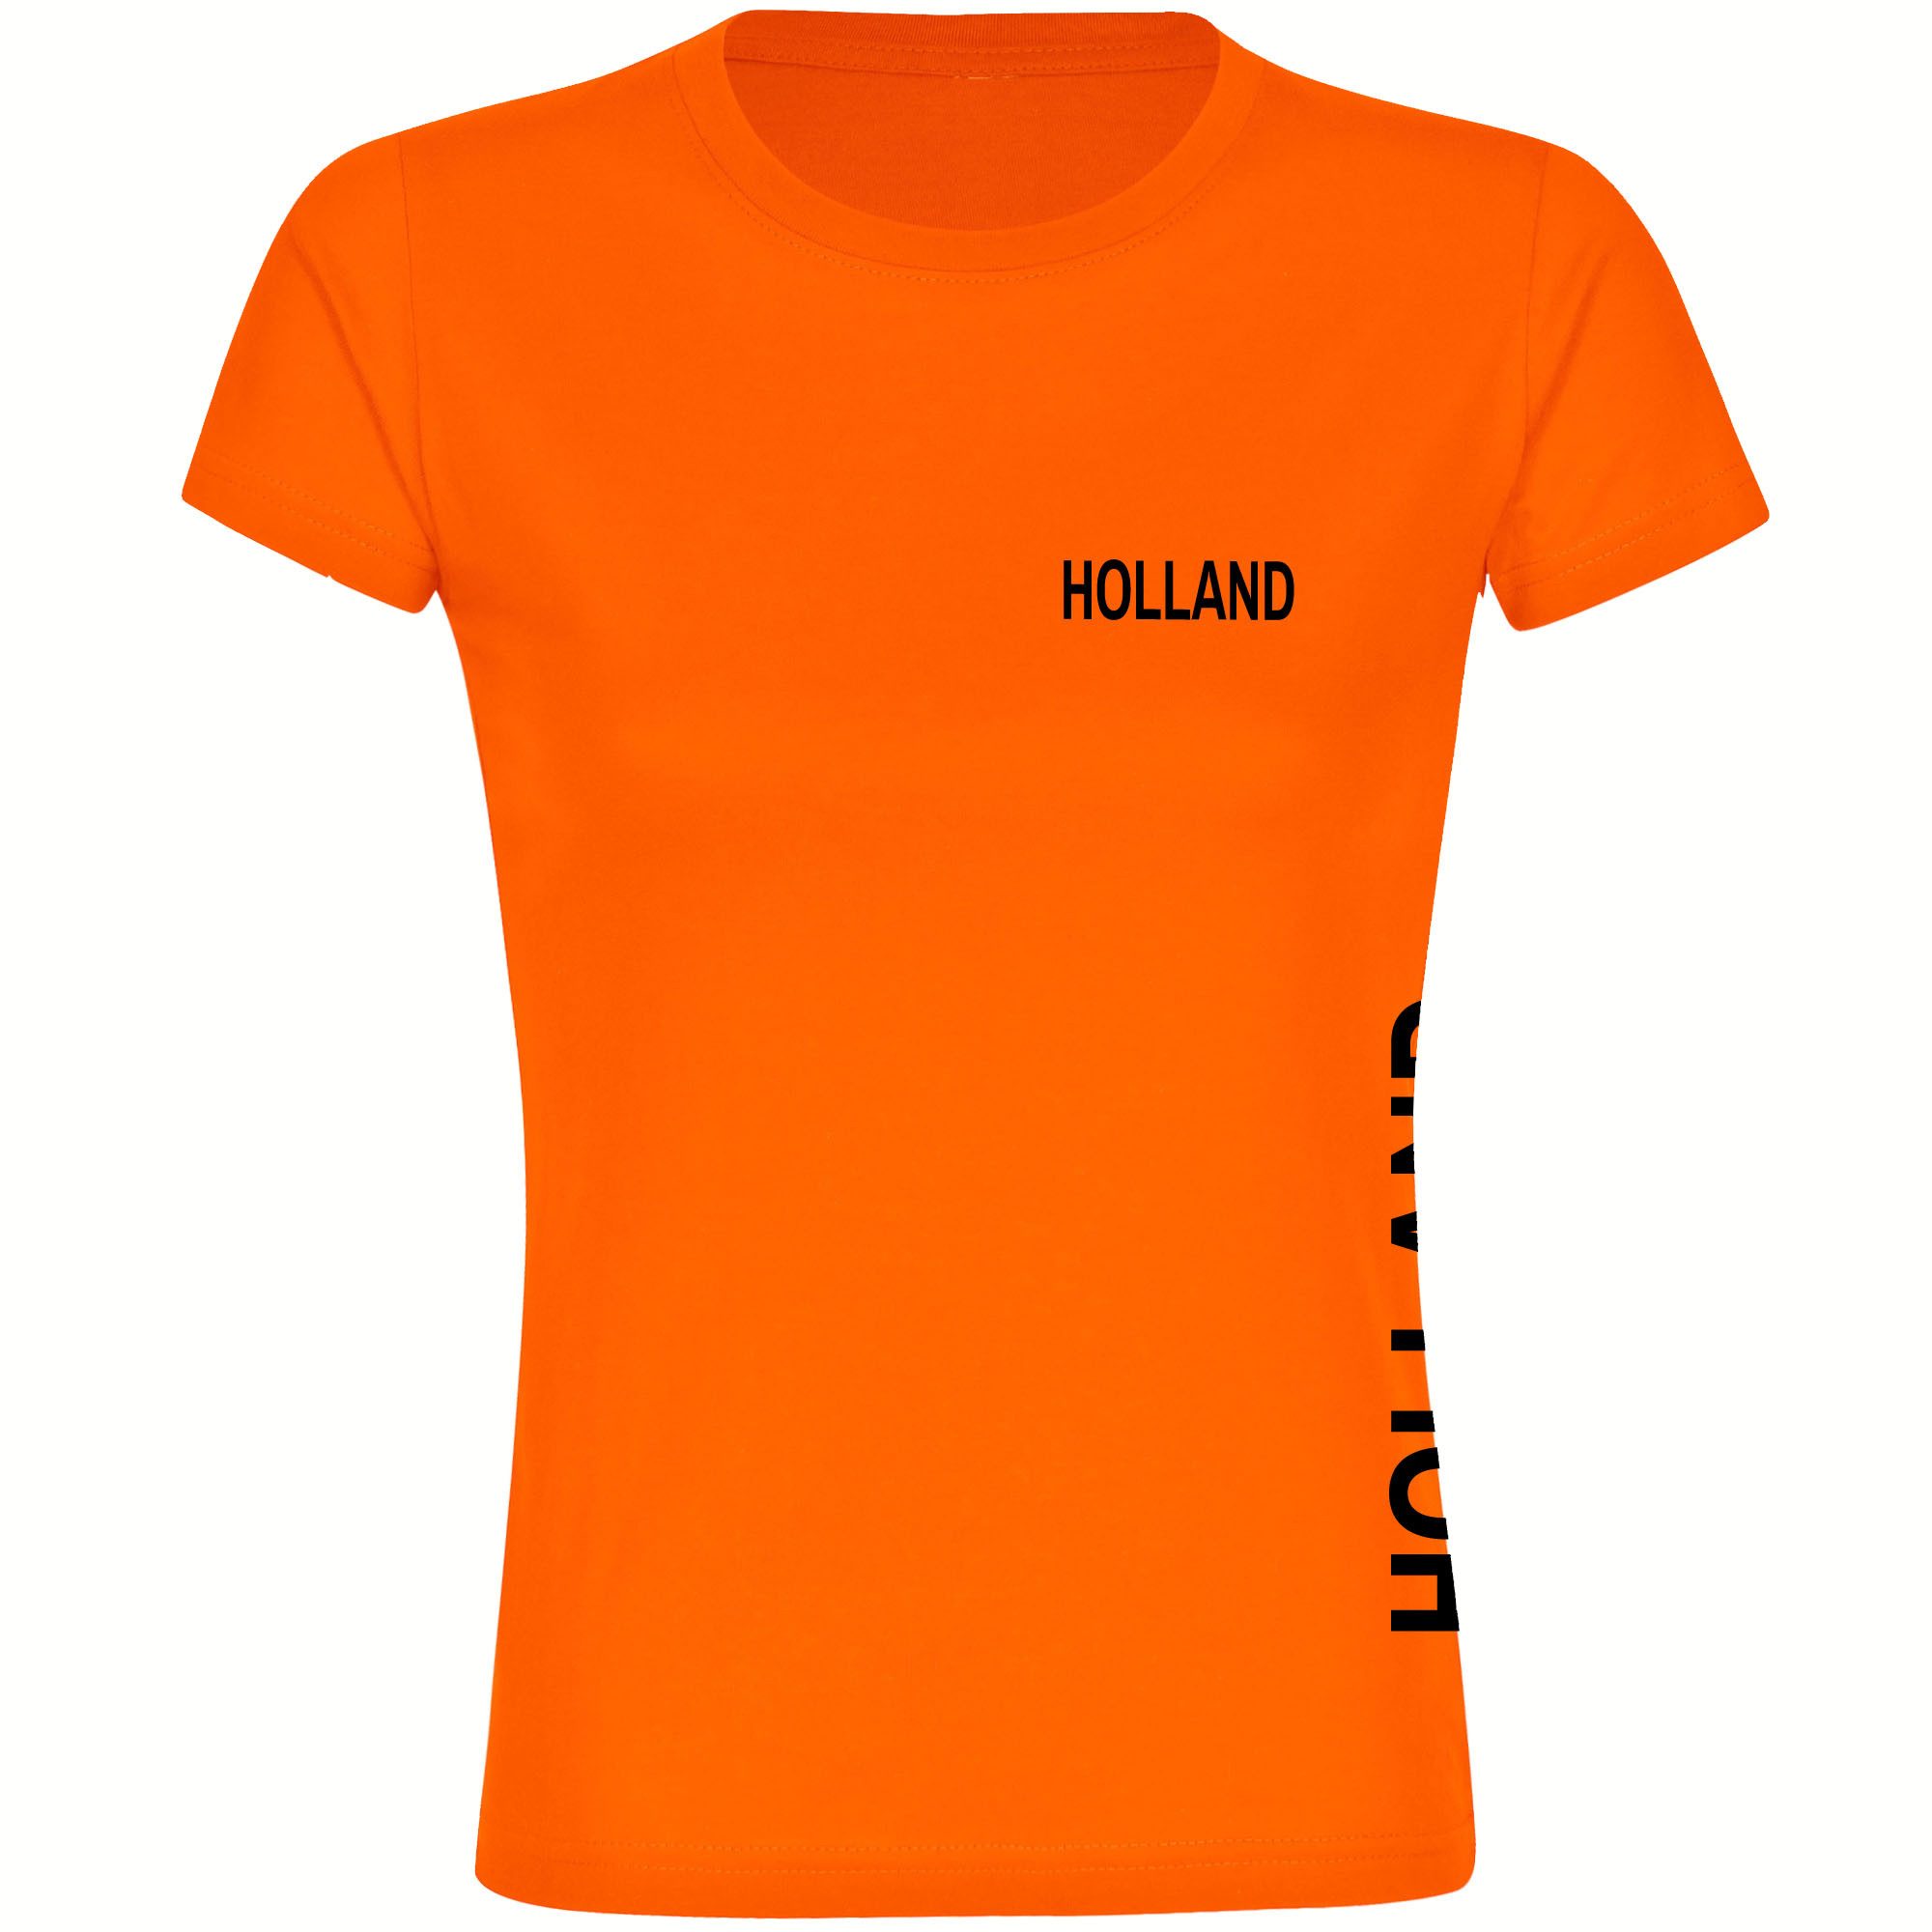 multifanshop T-Shirt Damen Holland - Brust & Seite - Frauen